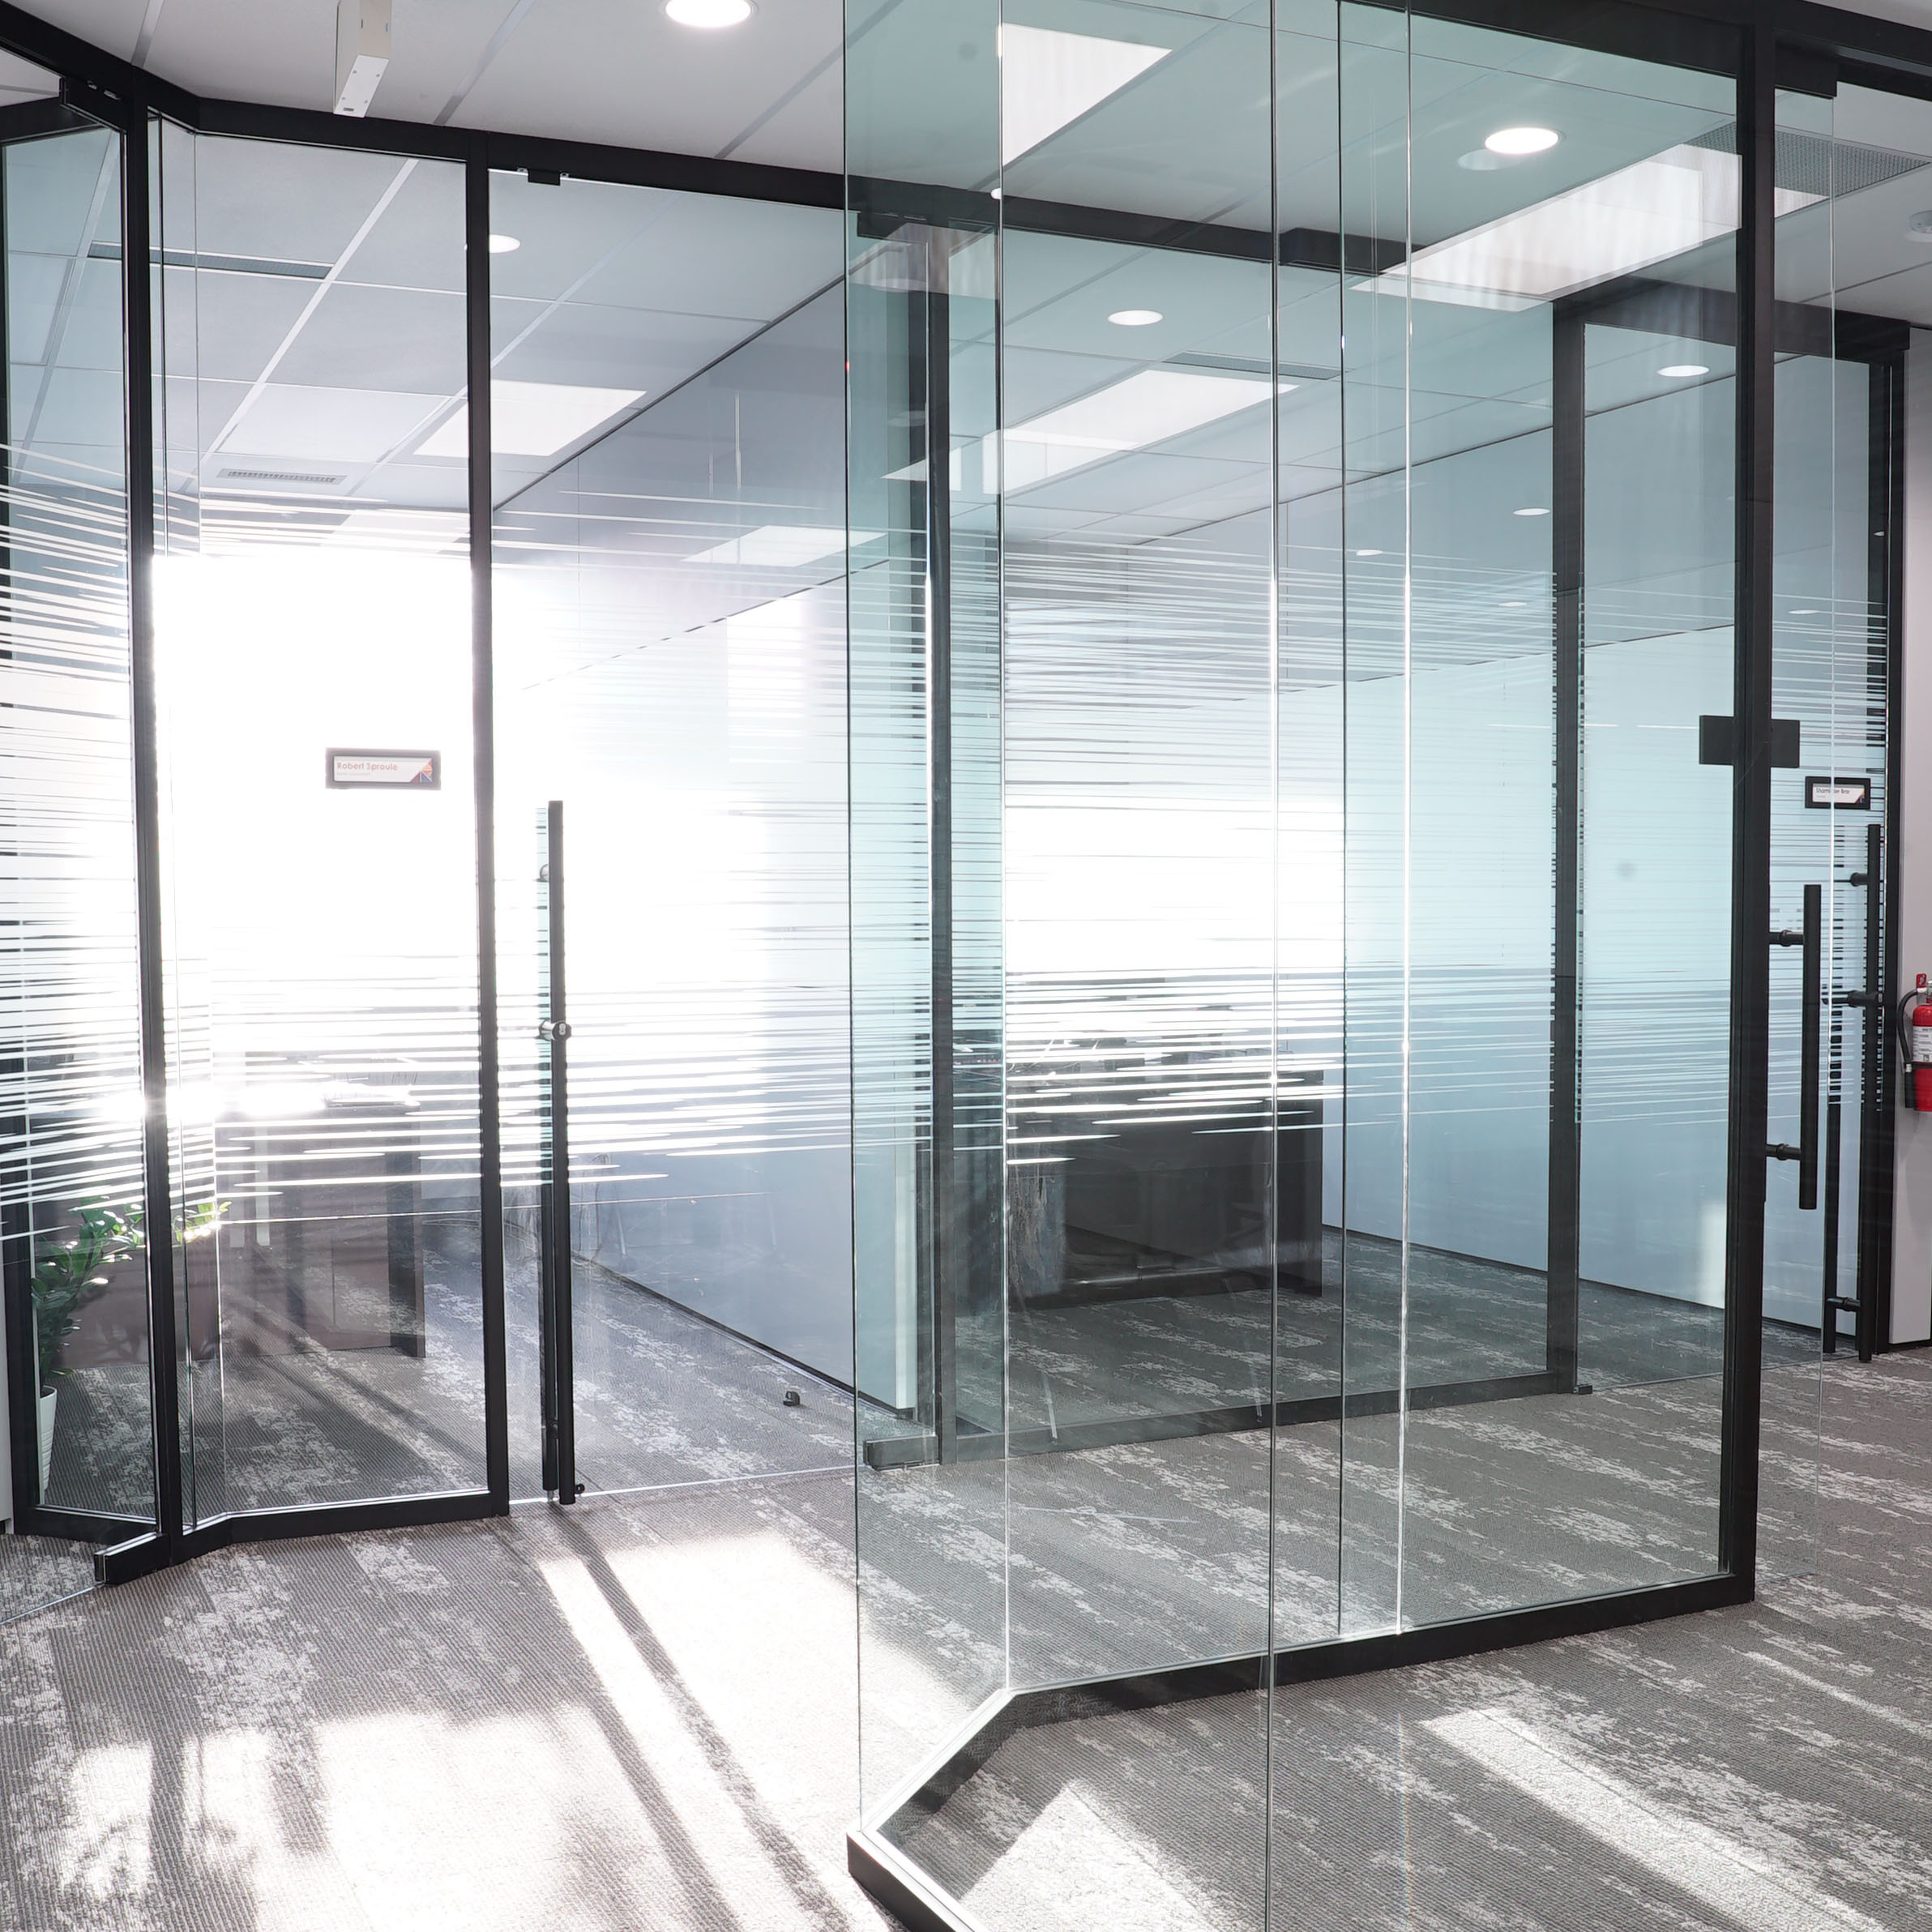 Falkbuilt Calgary commercial + office glass walls glass doors